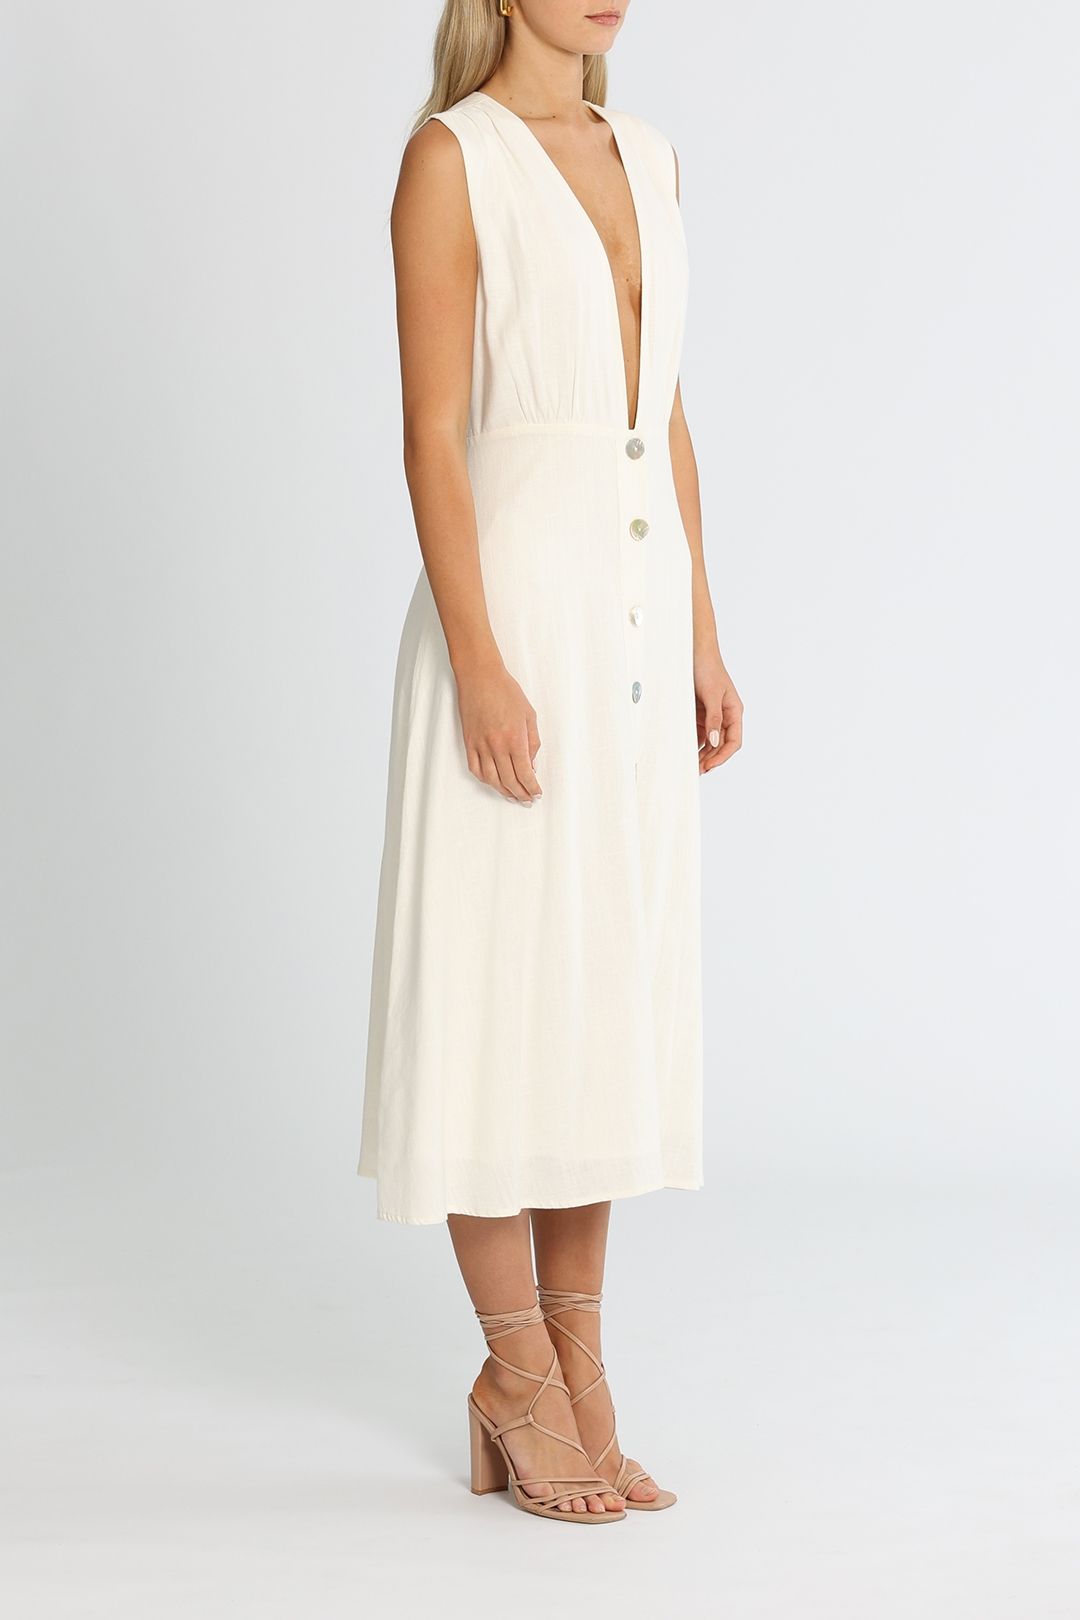 Girl and the Sun Portofino White Sleeveless Midi Dress Plunge